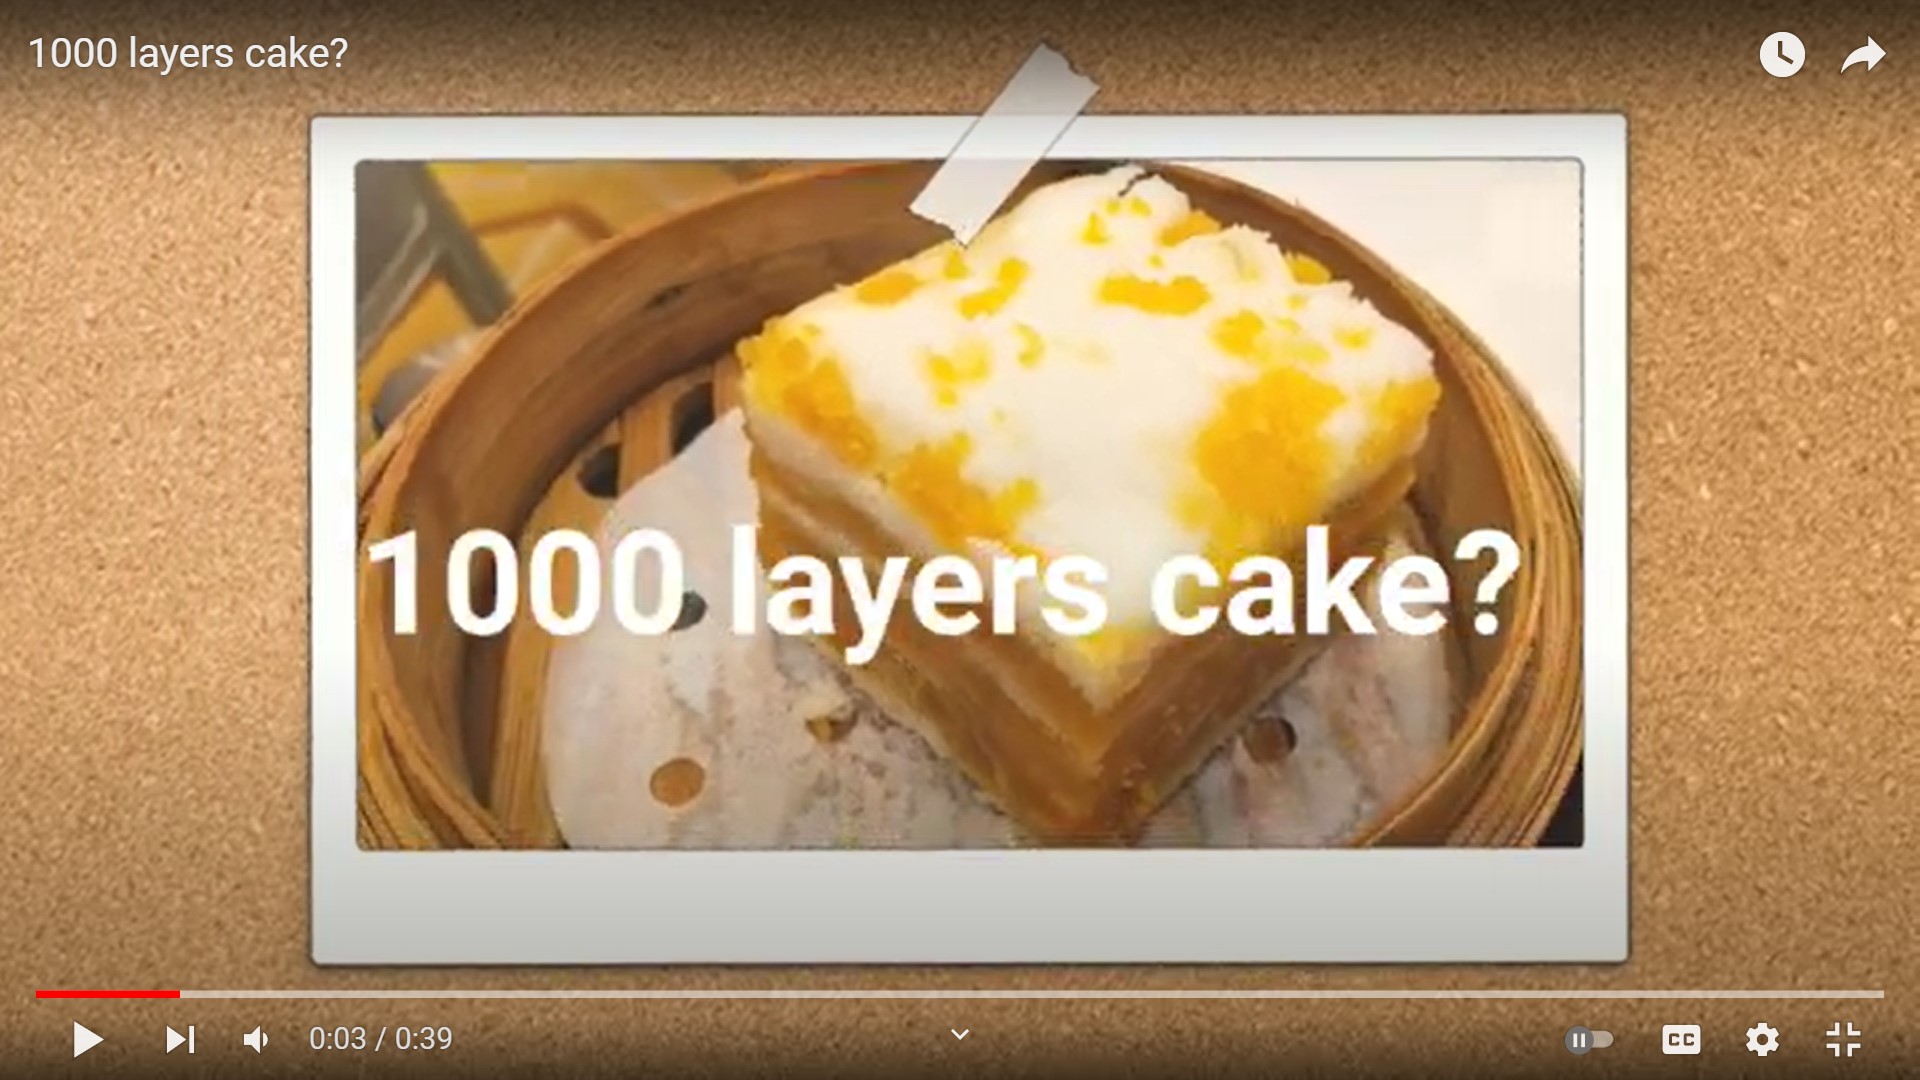 Frank's "1000 layers cake?" snapshots video